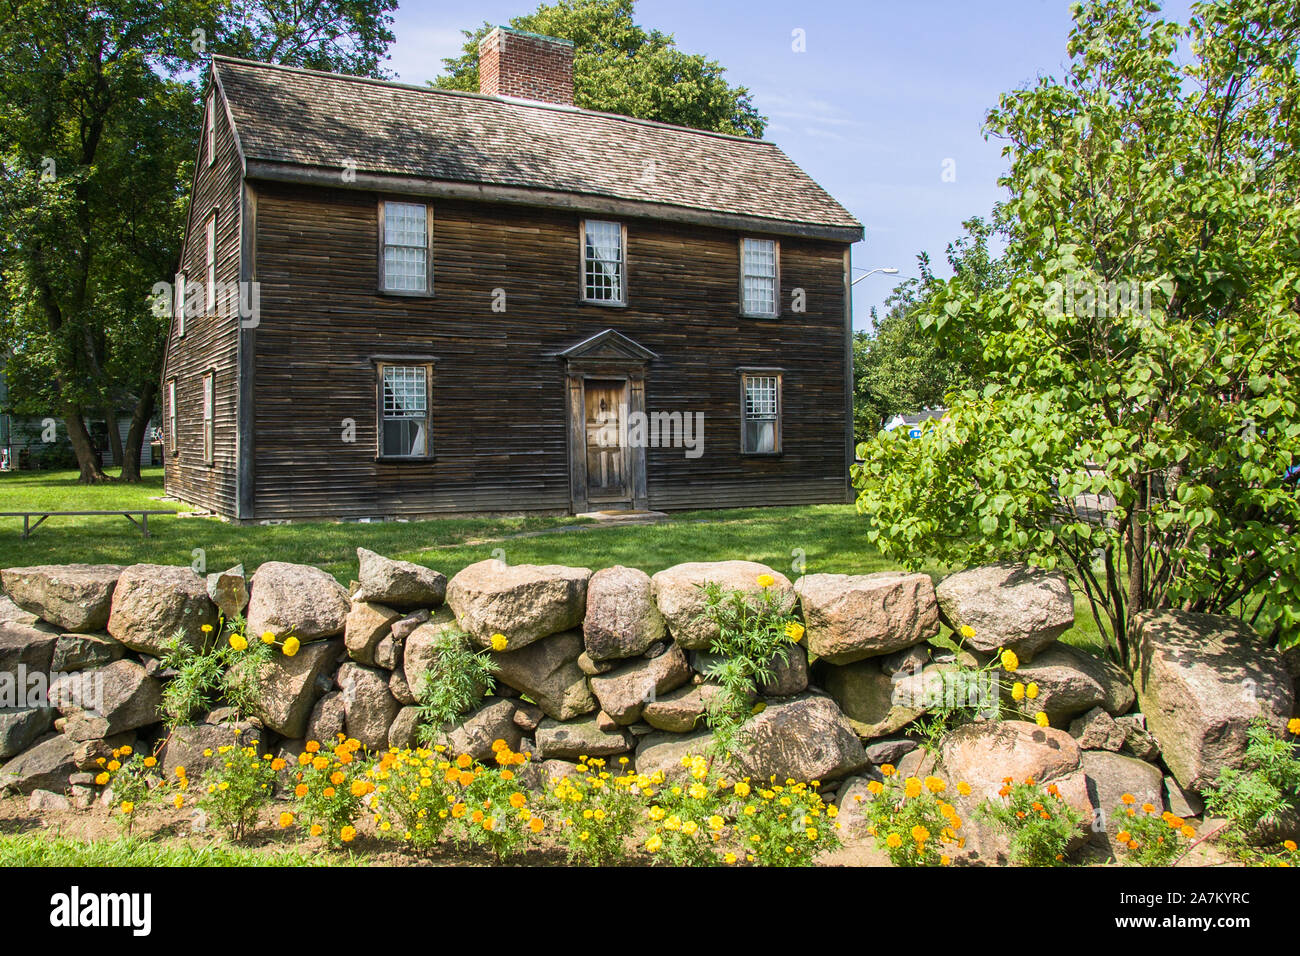 Adams National Historical Park - John Quincy Adams birthplace - Quincy, MA Stock Photo